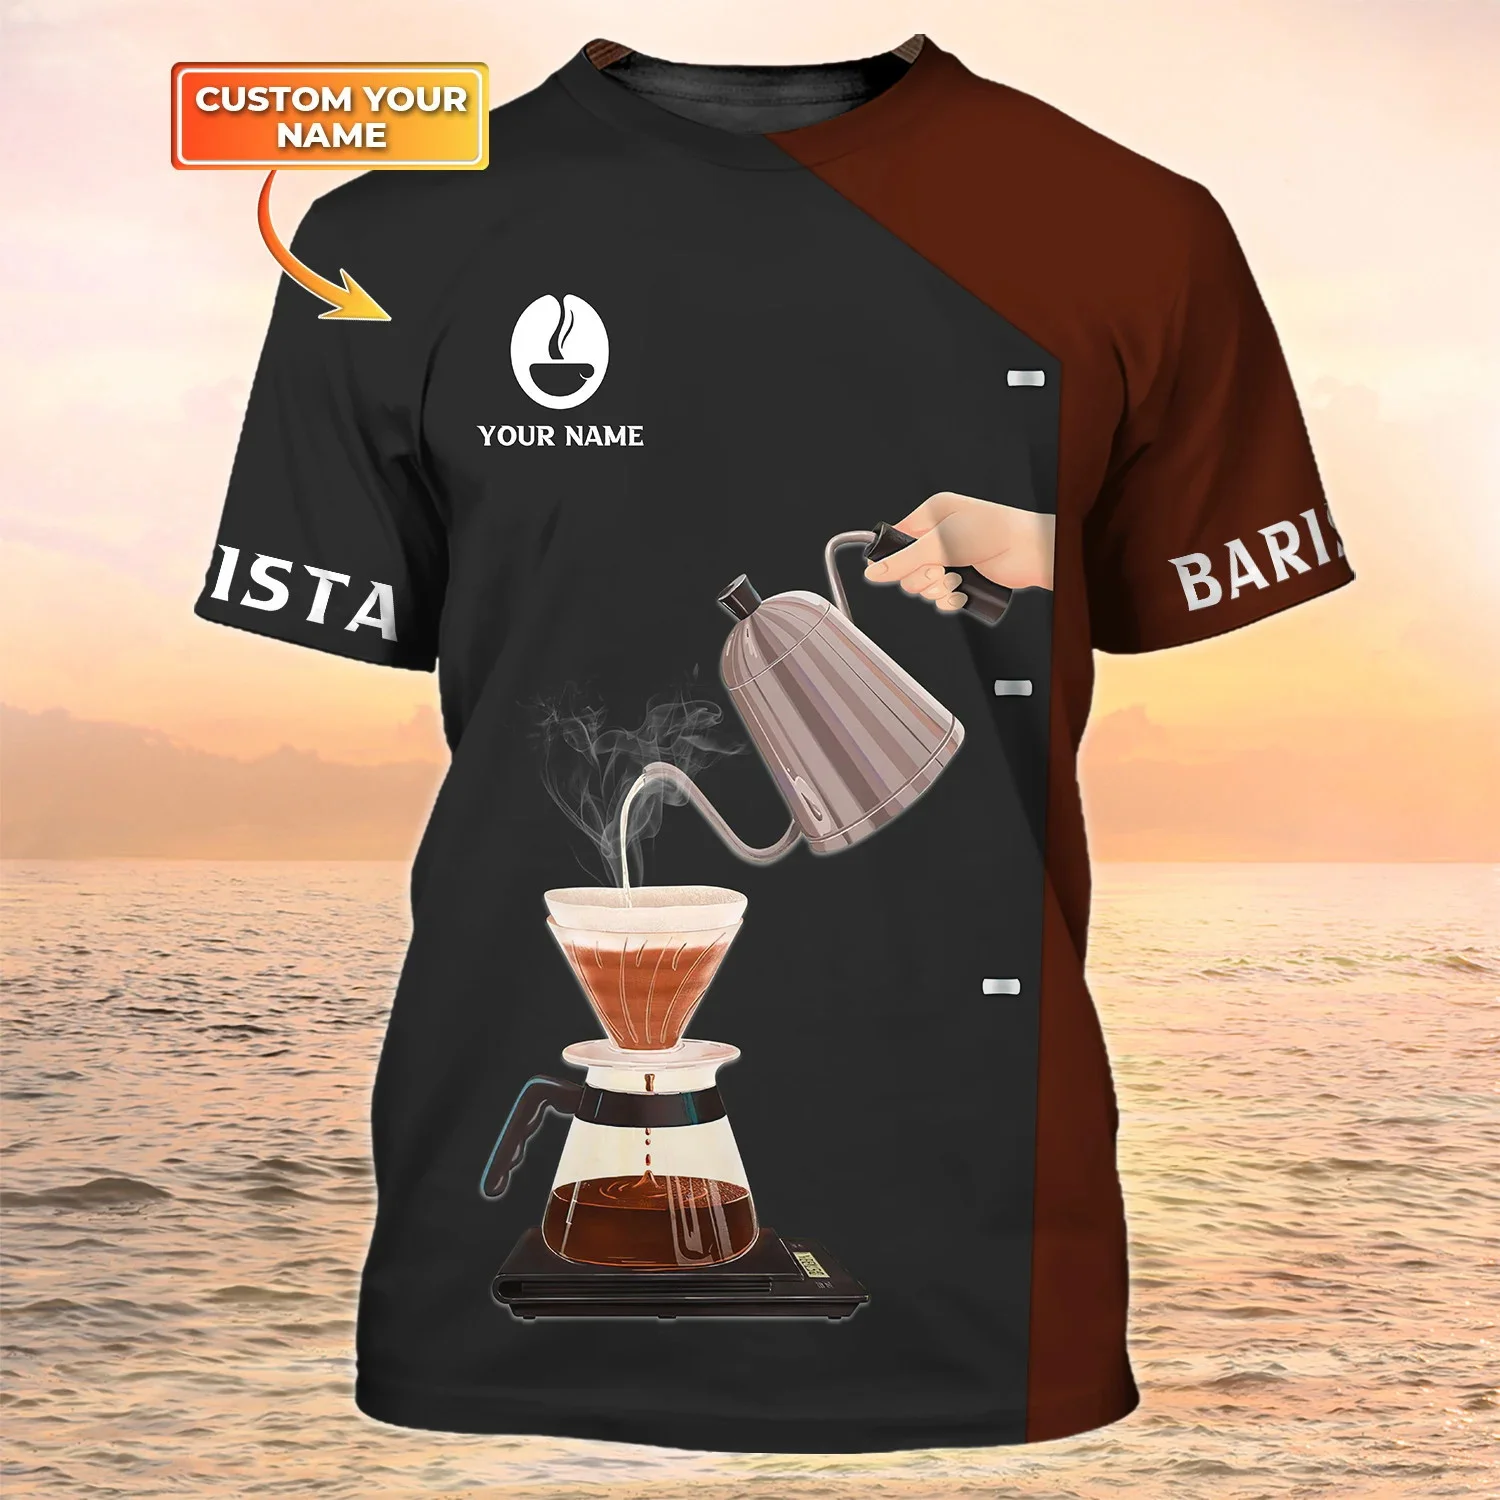 Newest Summer Men‘s Barista T-shirt Coffee Lover Custom Name 3D Printed t shirt Unisex Casual Tshirt Coffee Shop Uniform DW102